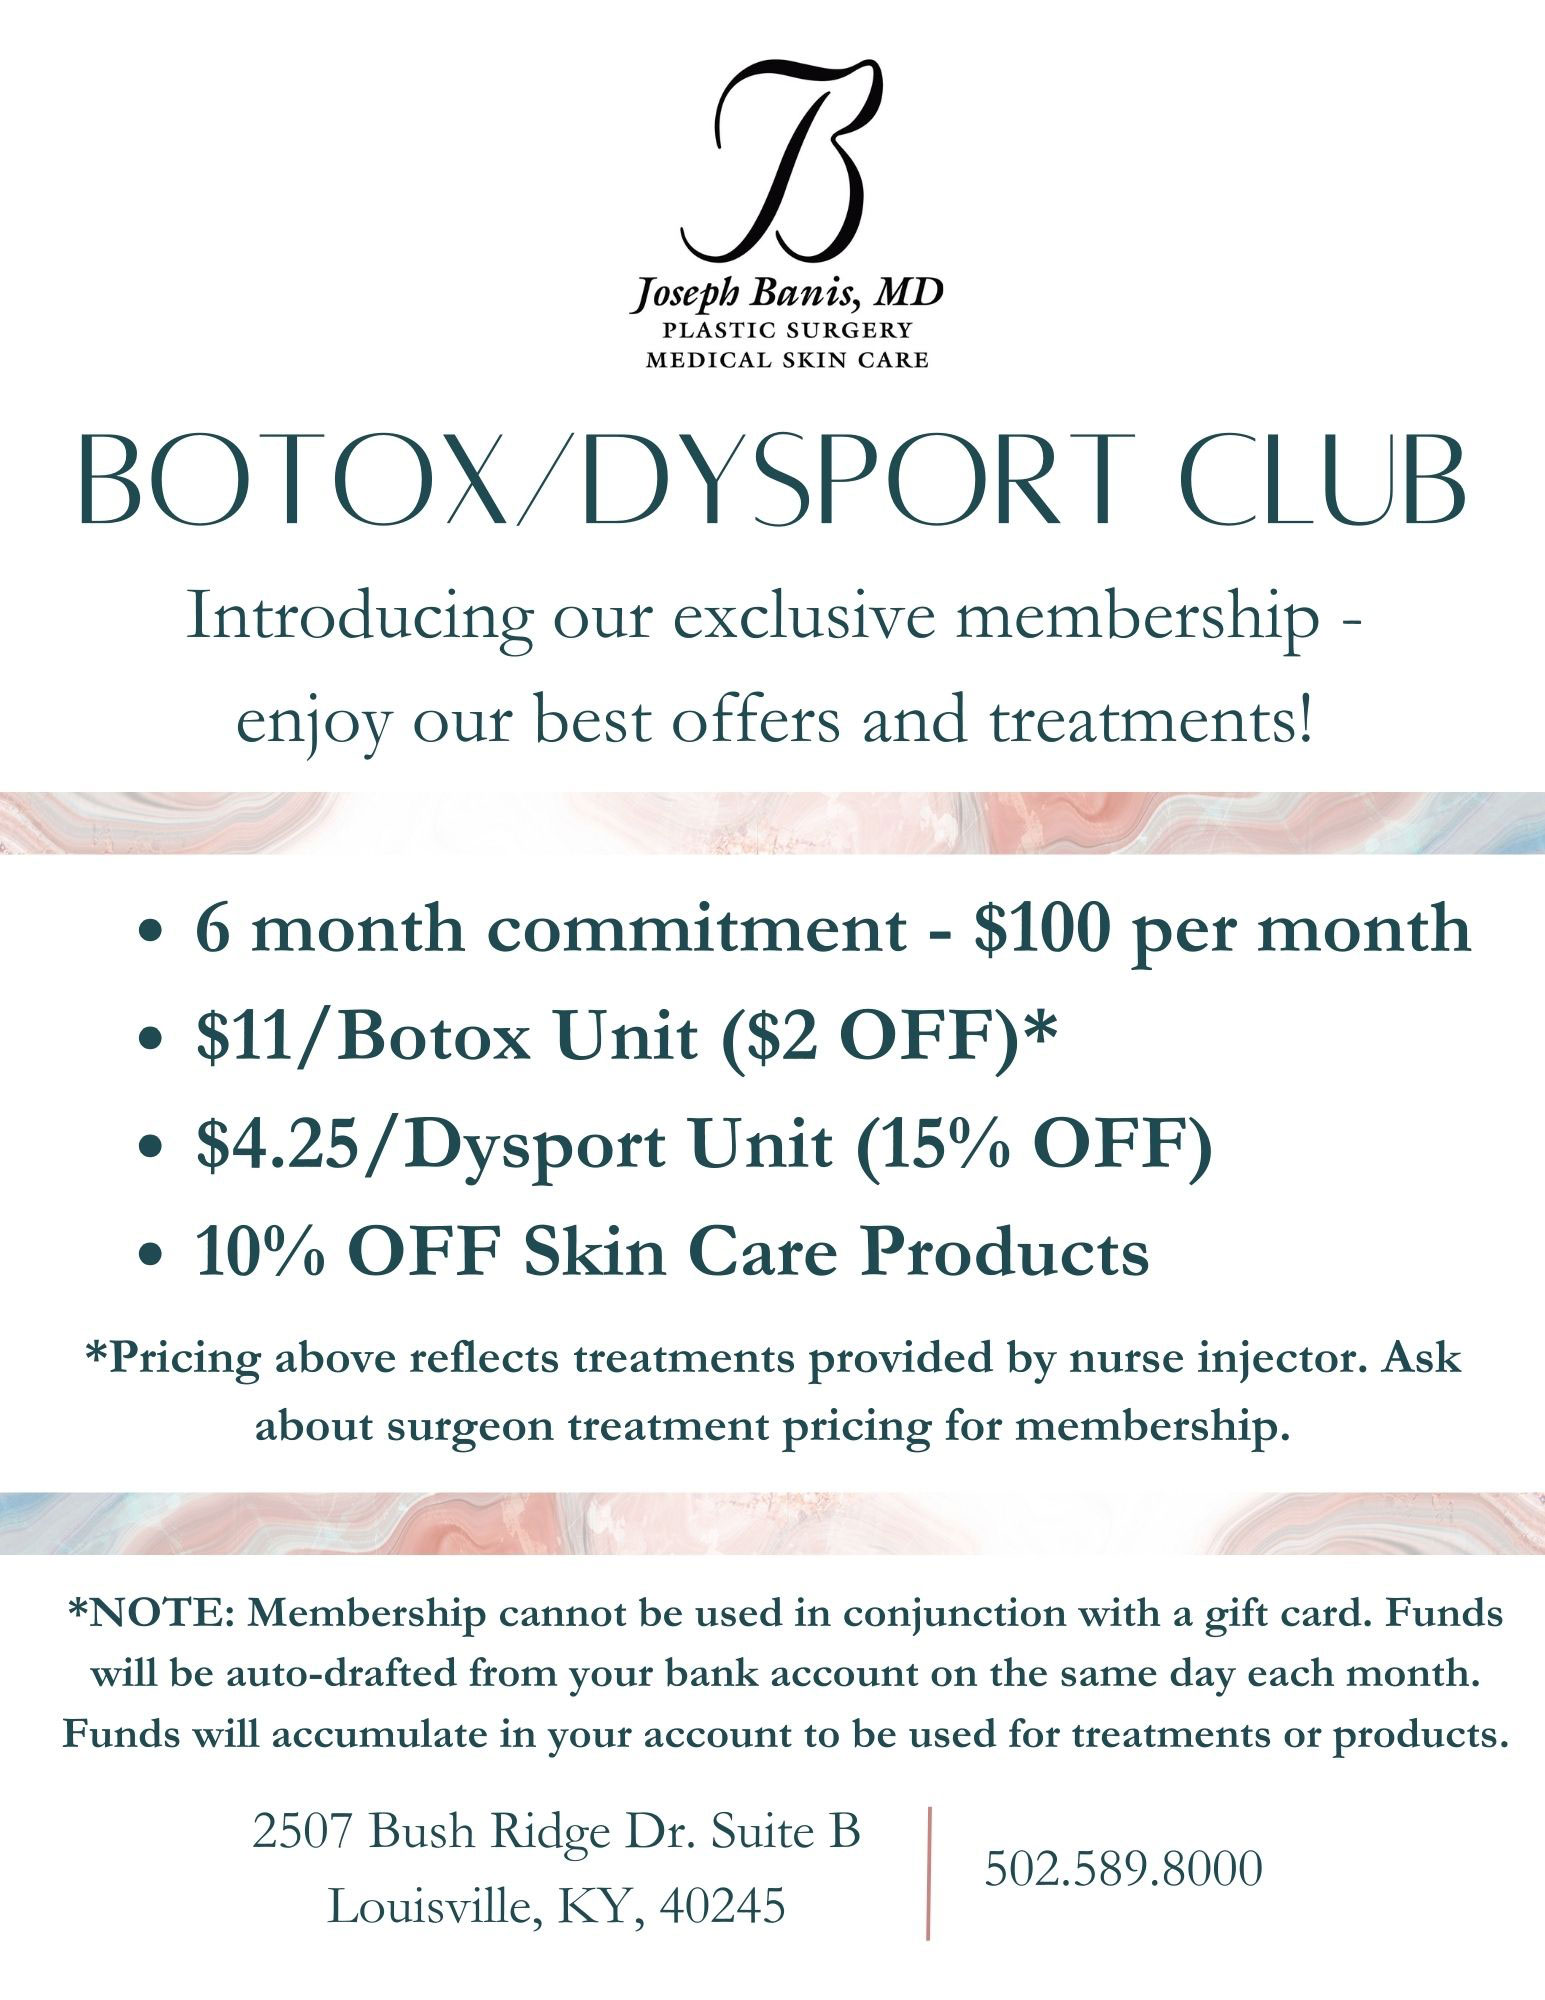 Botox Dysport - membership